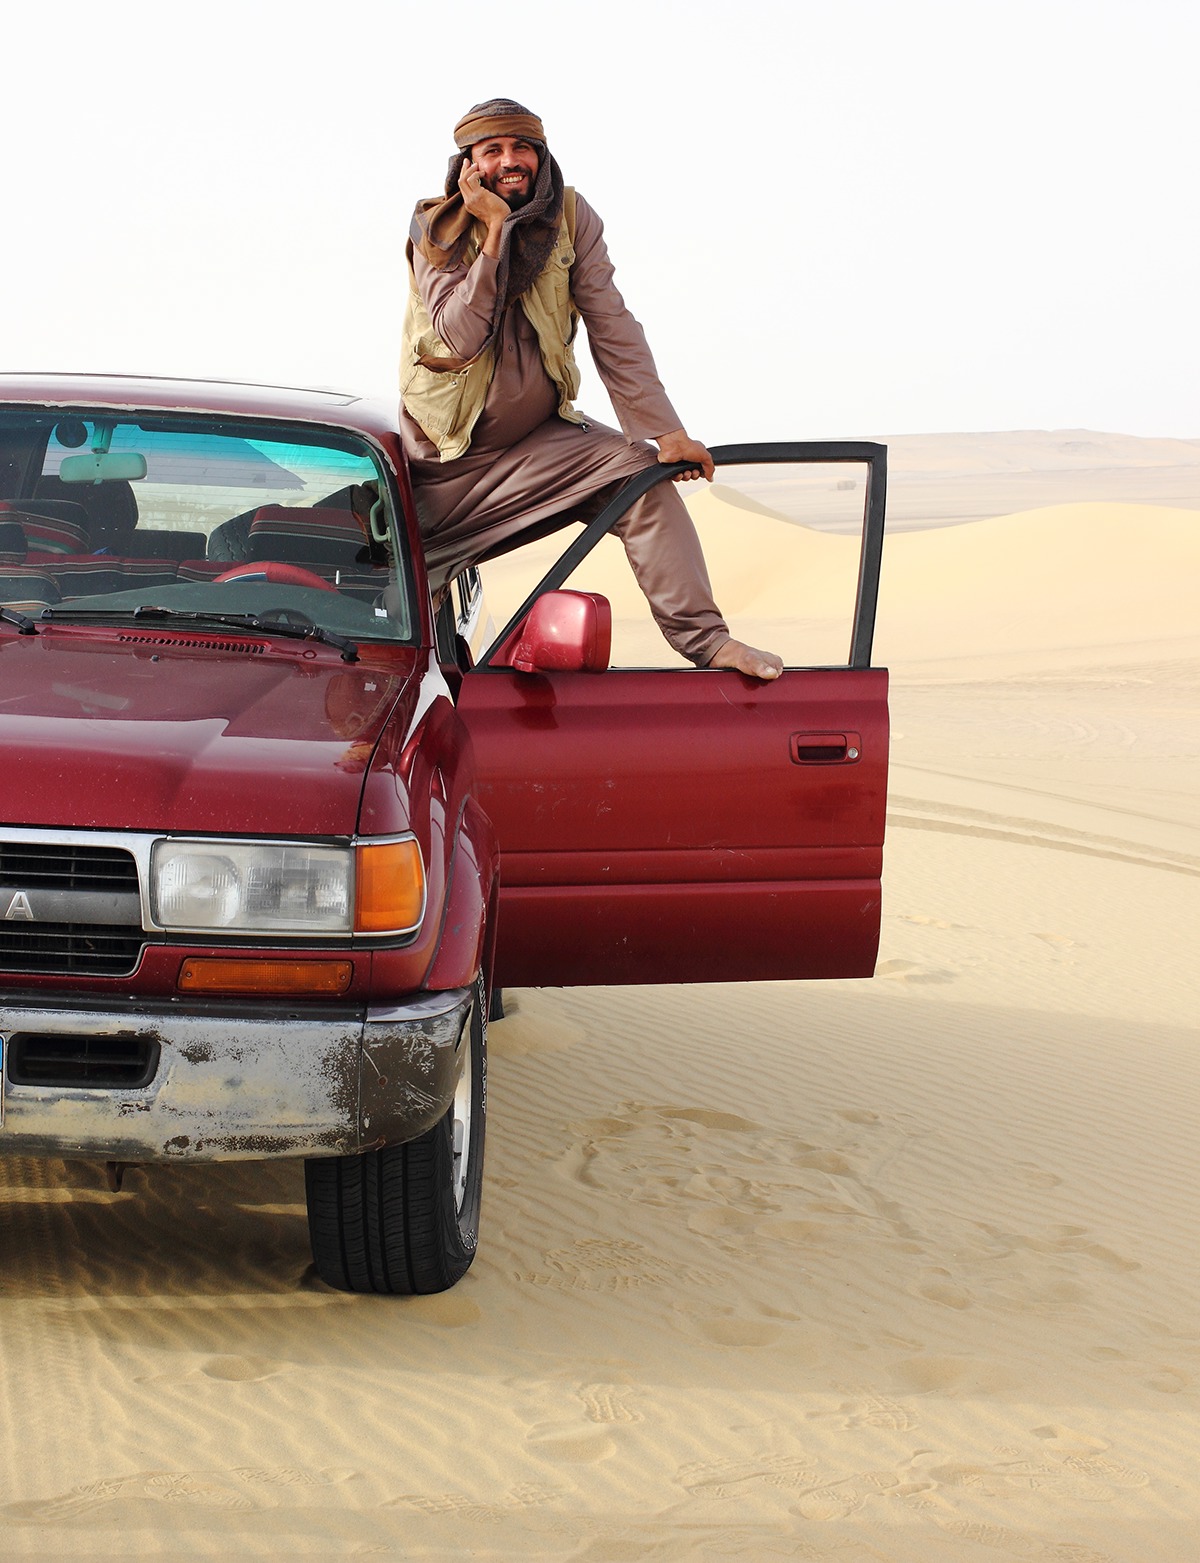 desert jeep Arab bedouin Fun